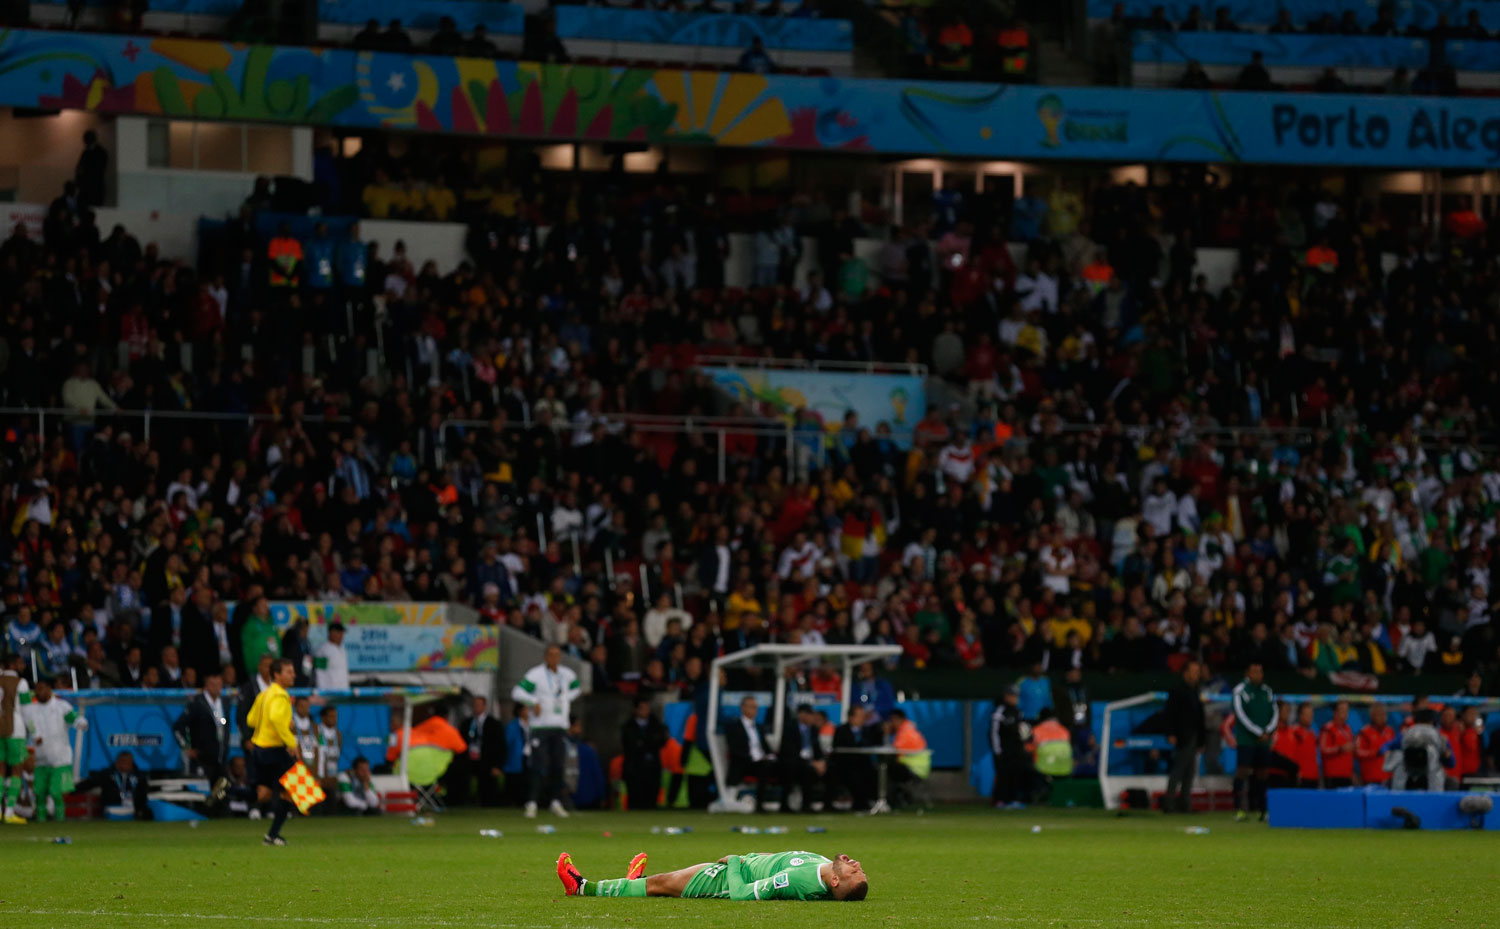 Algeria's Islam Slimani reacts to their loss at the Beira Rio stadium in Porto Alegre, Brazil on June 30, 2014.